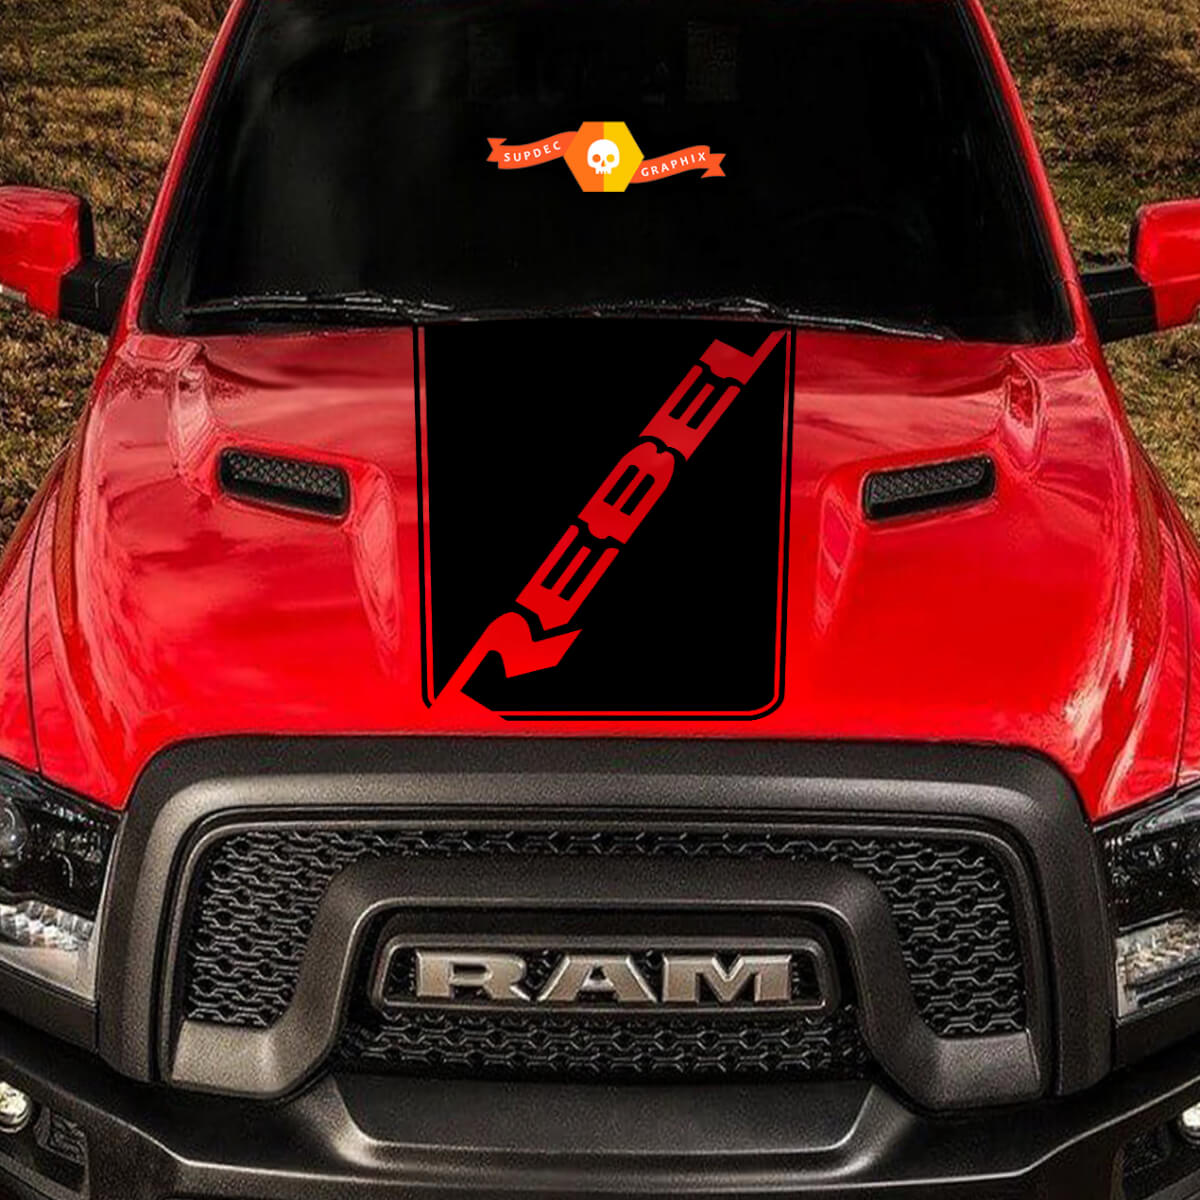 X-Wing fighter  Fits Ram Rebel Hood Truck Vinyl Decal Vehicle Graphic